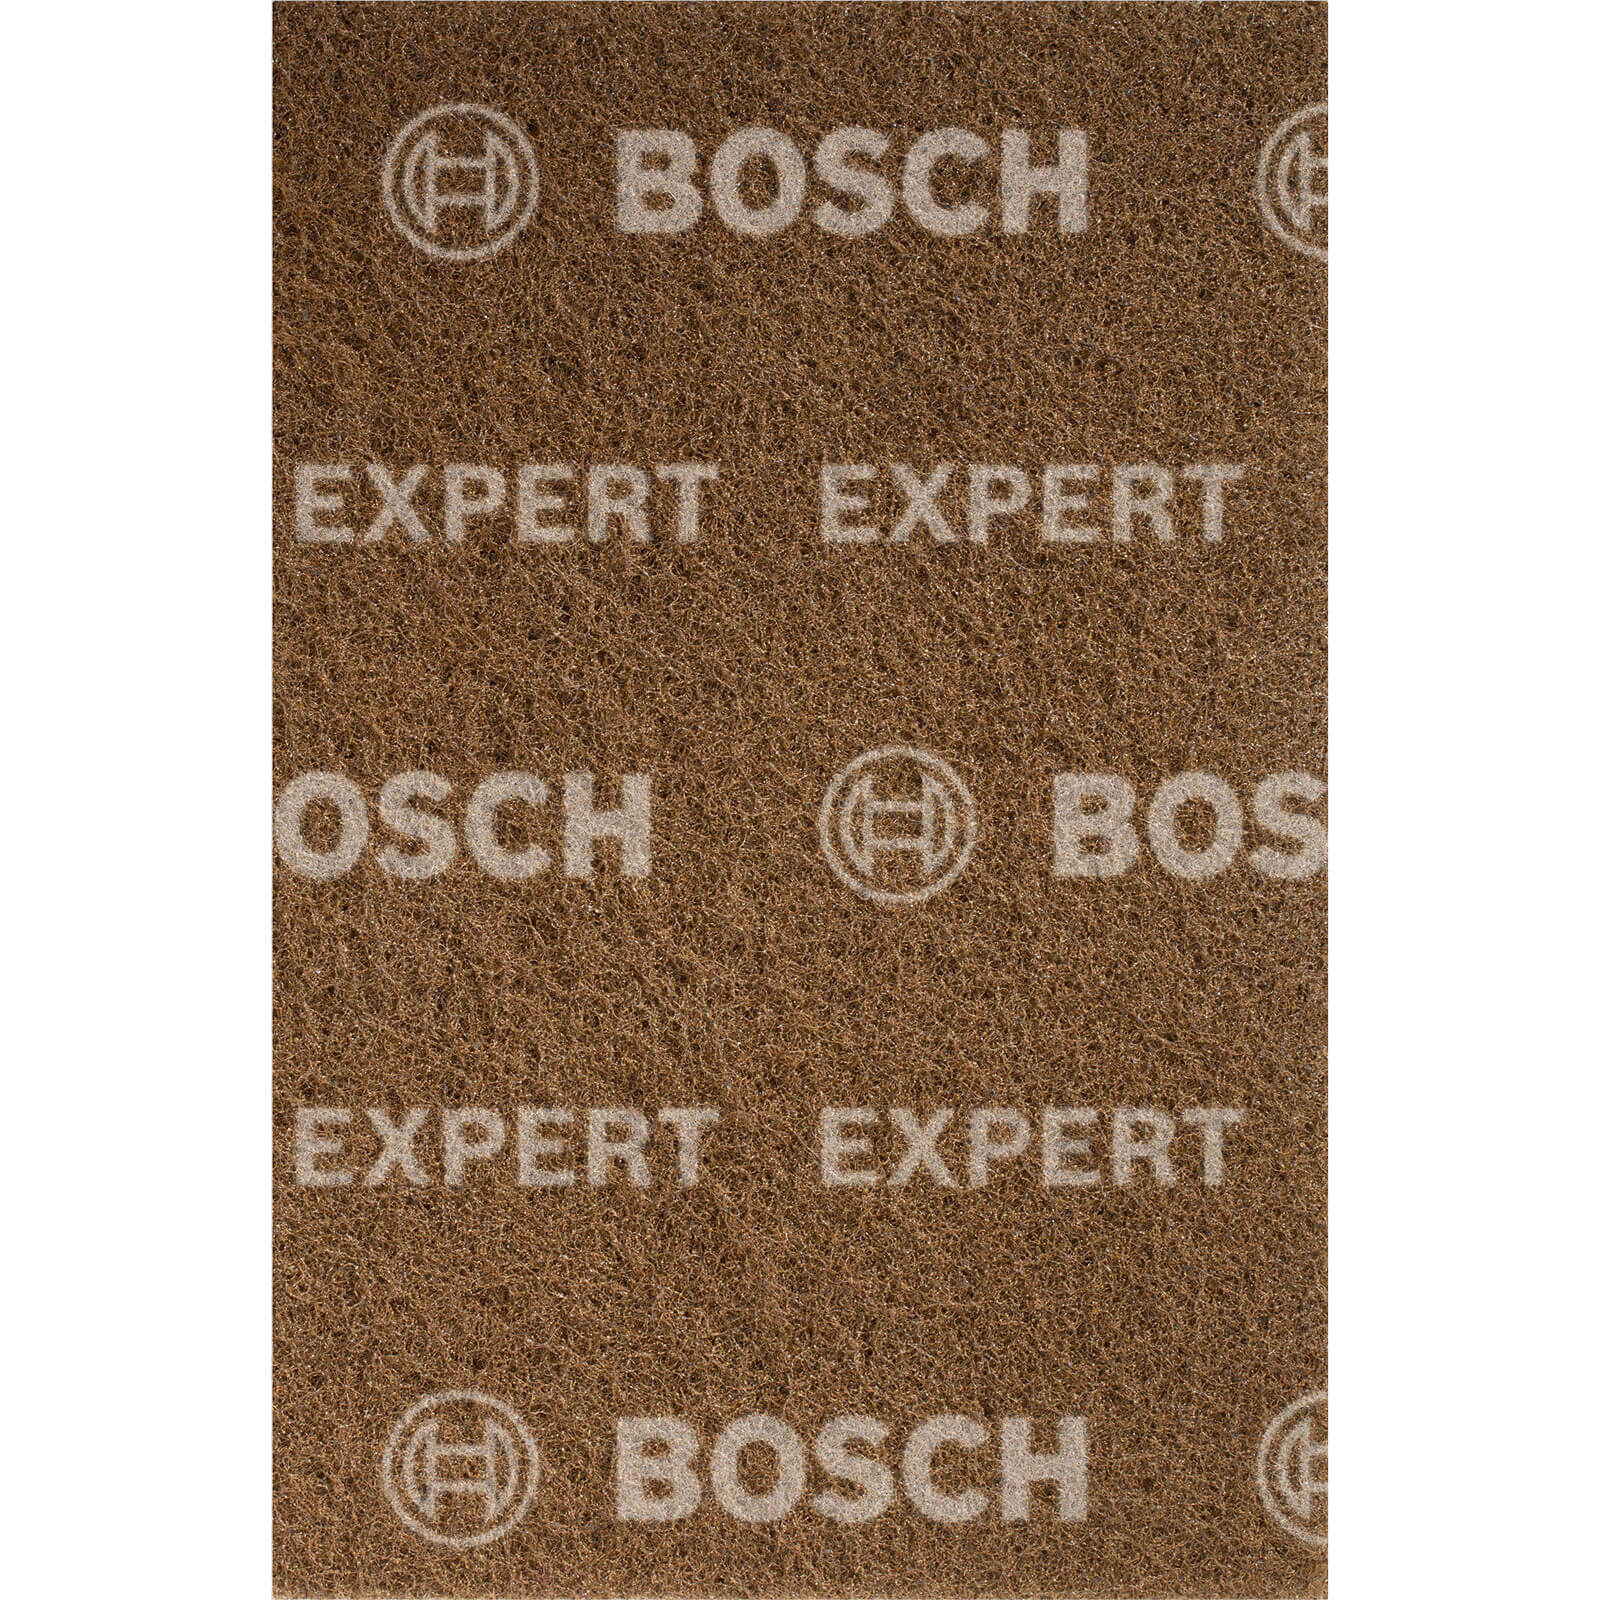 Image of Bosch Expert N880 Fleece Hand Pad Coarse Pack of 1